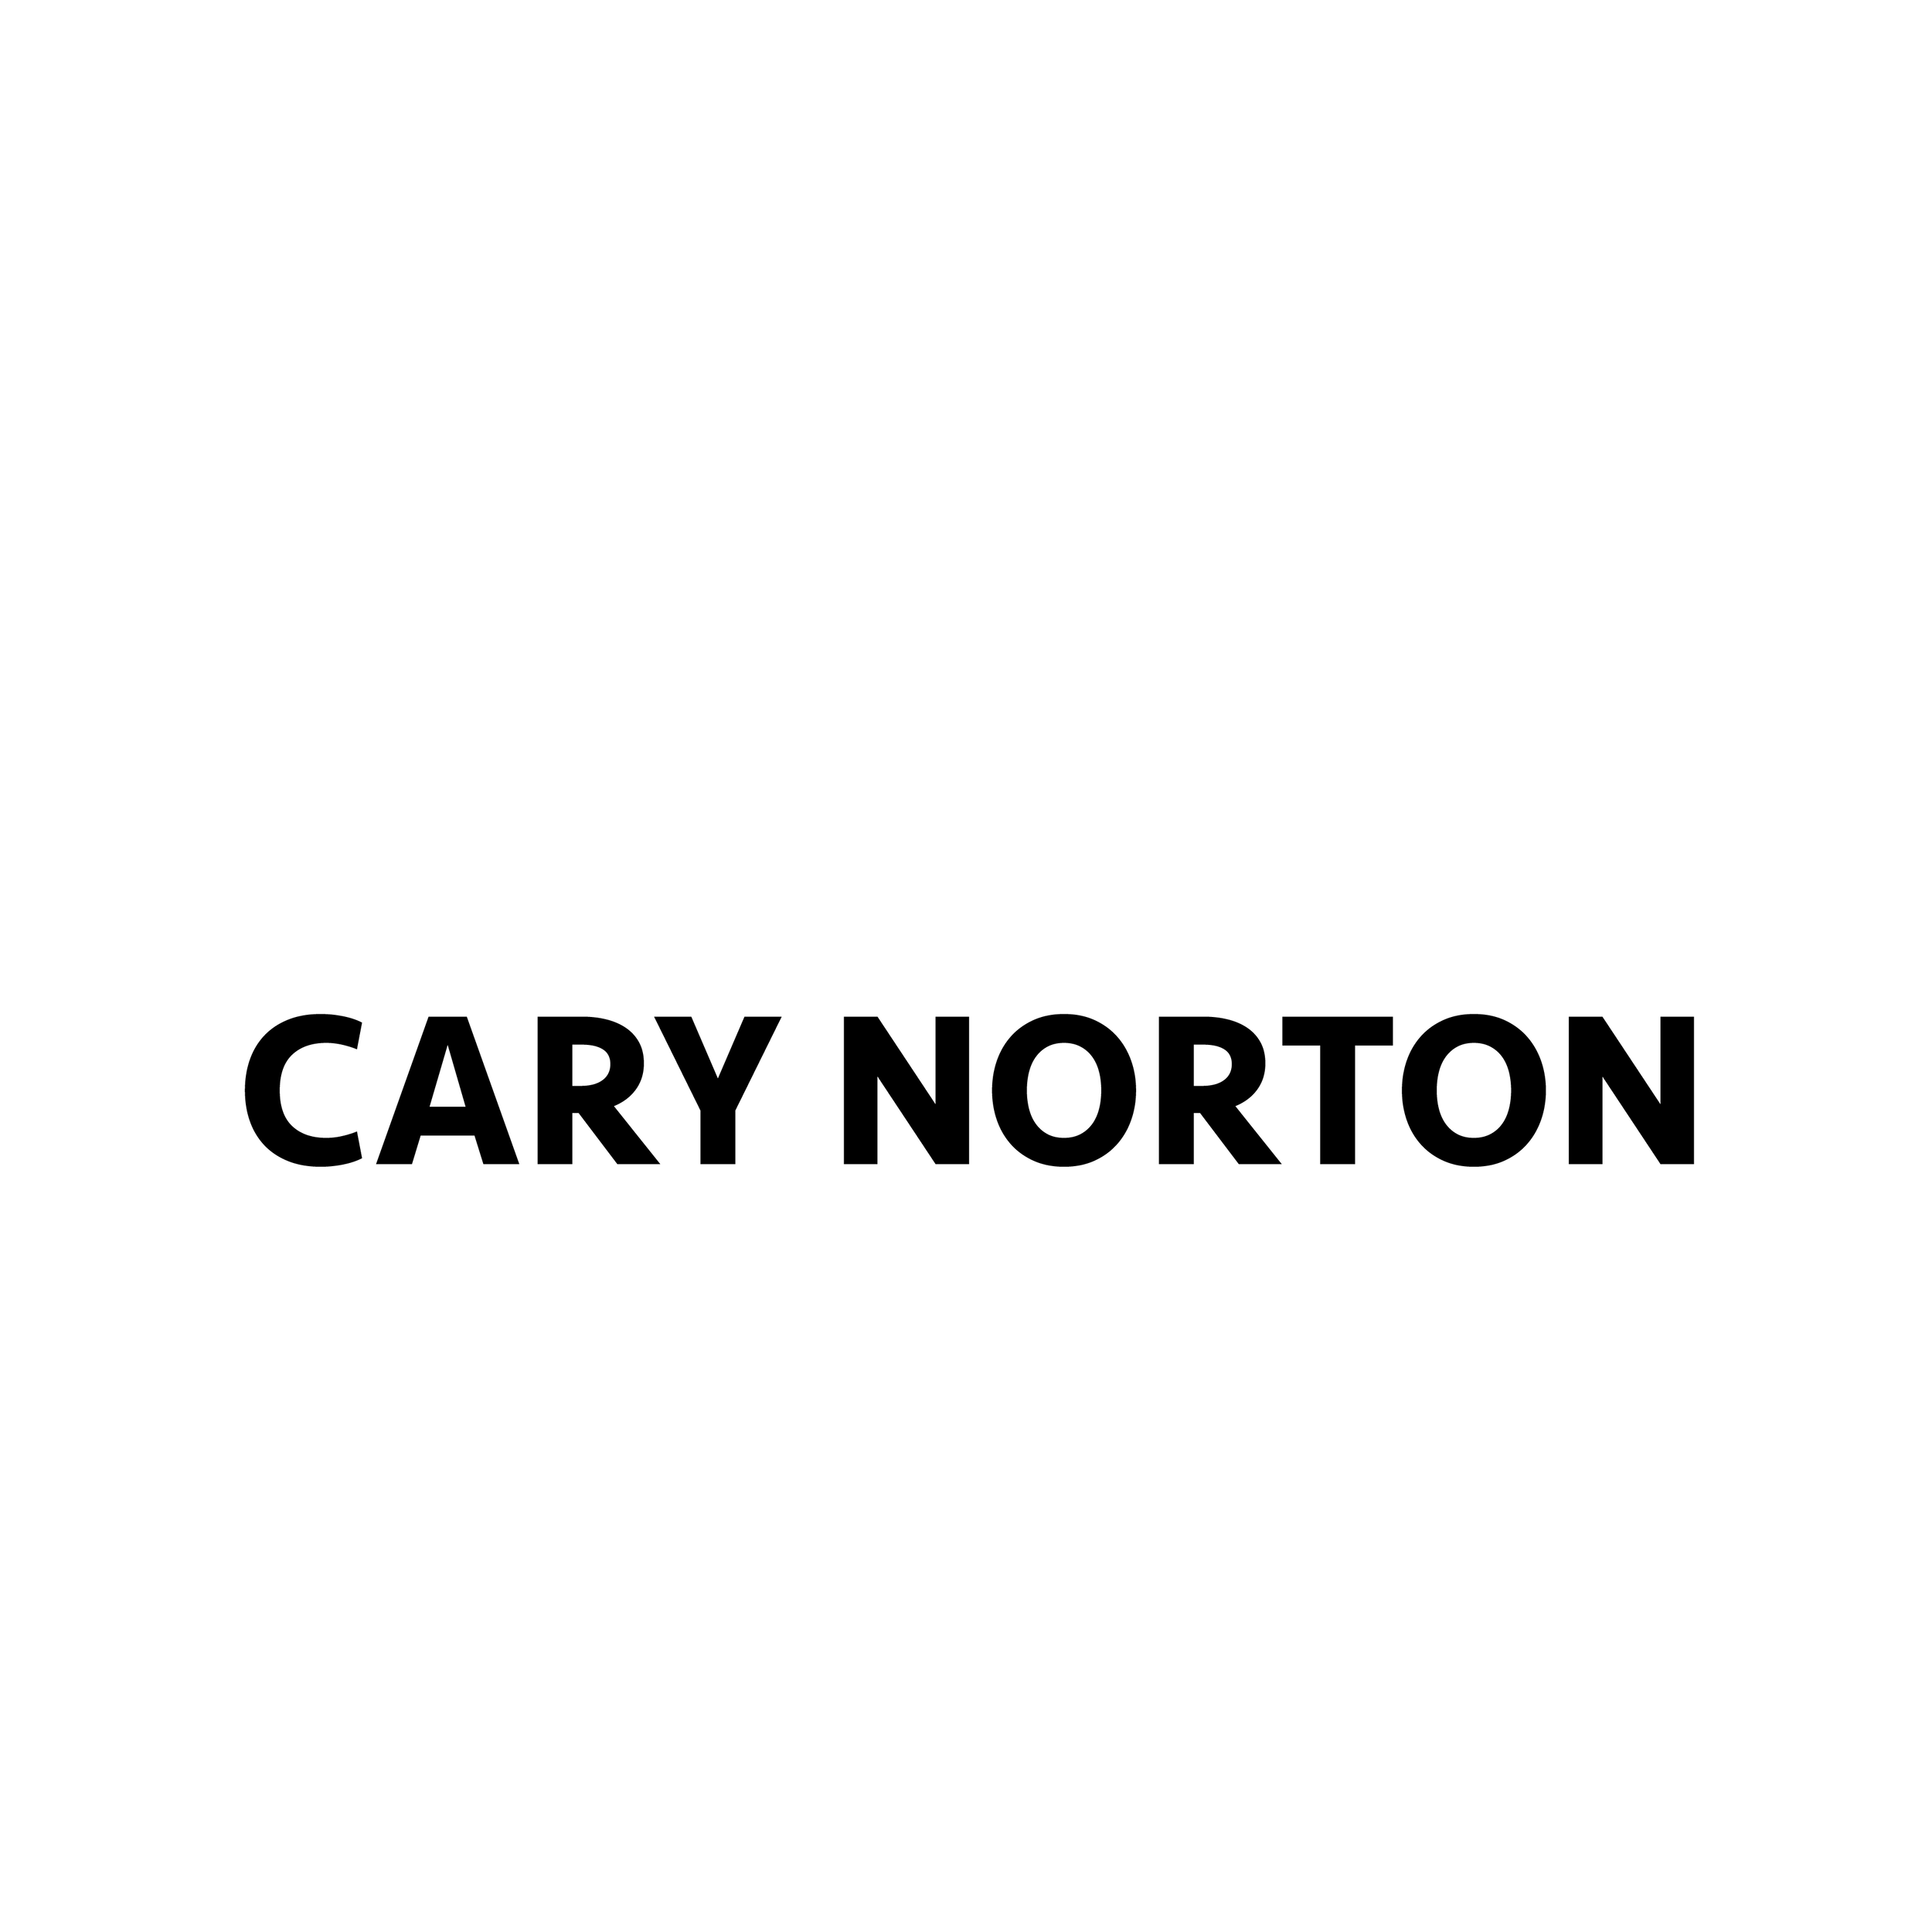 Cary Norton